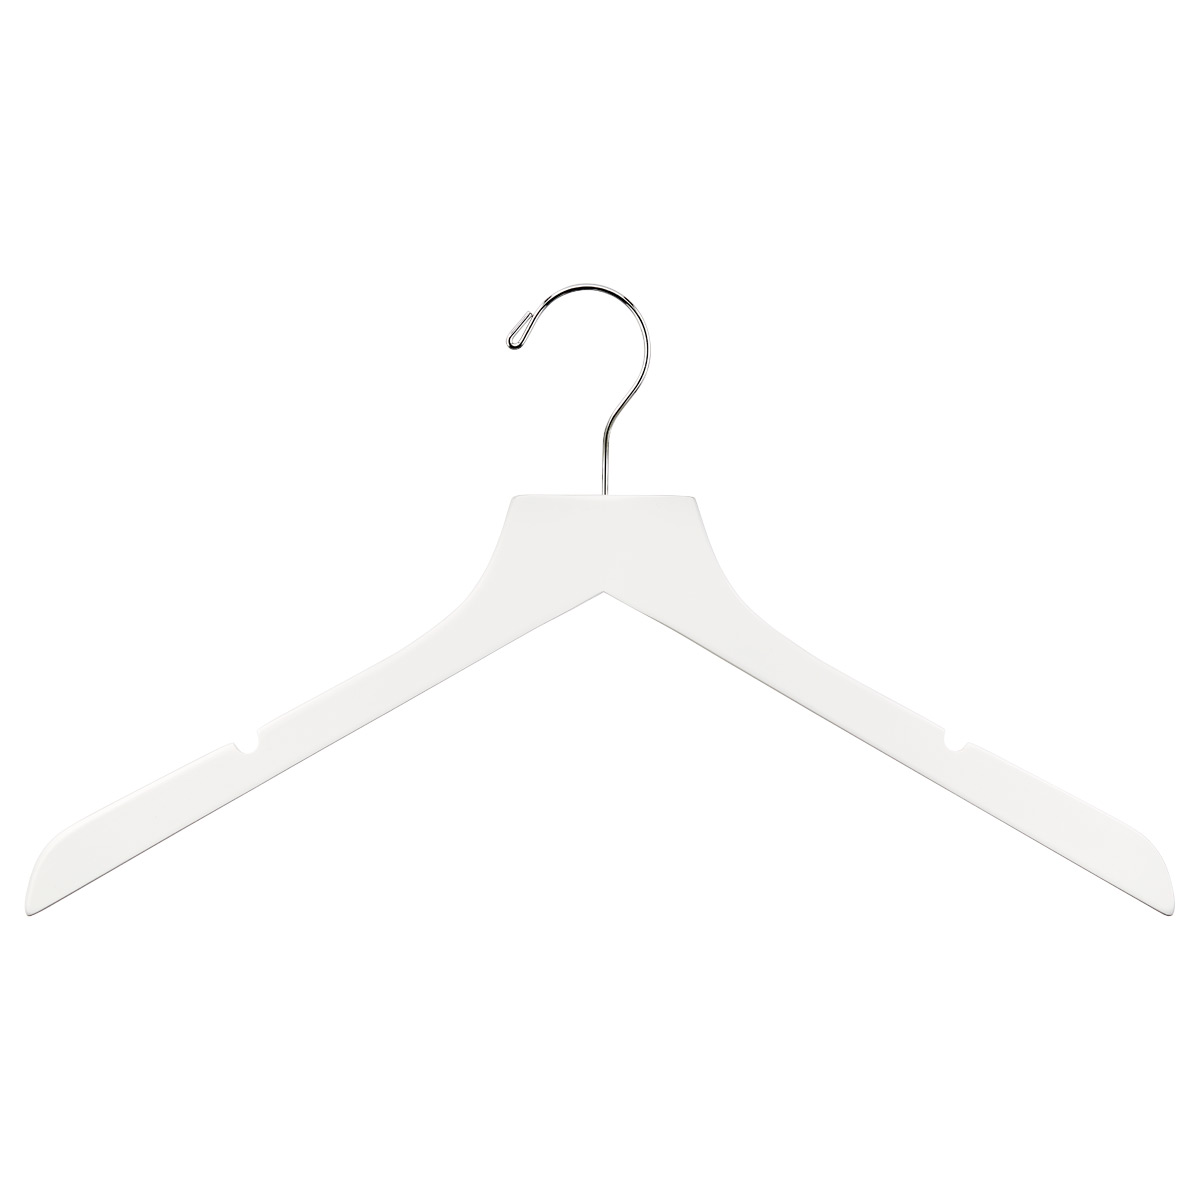 Slim Woods Shirt Hanger w/ Notches White Pkg/40